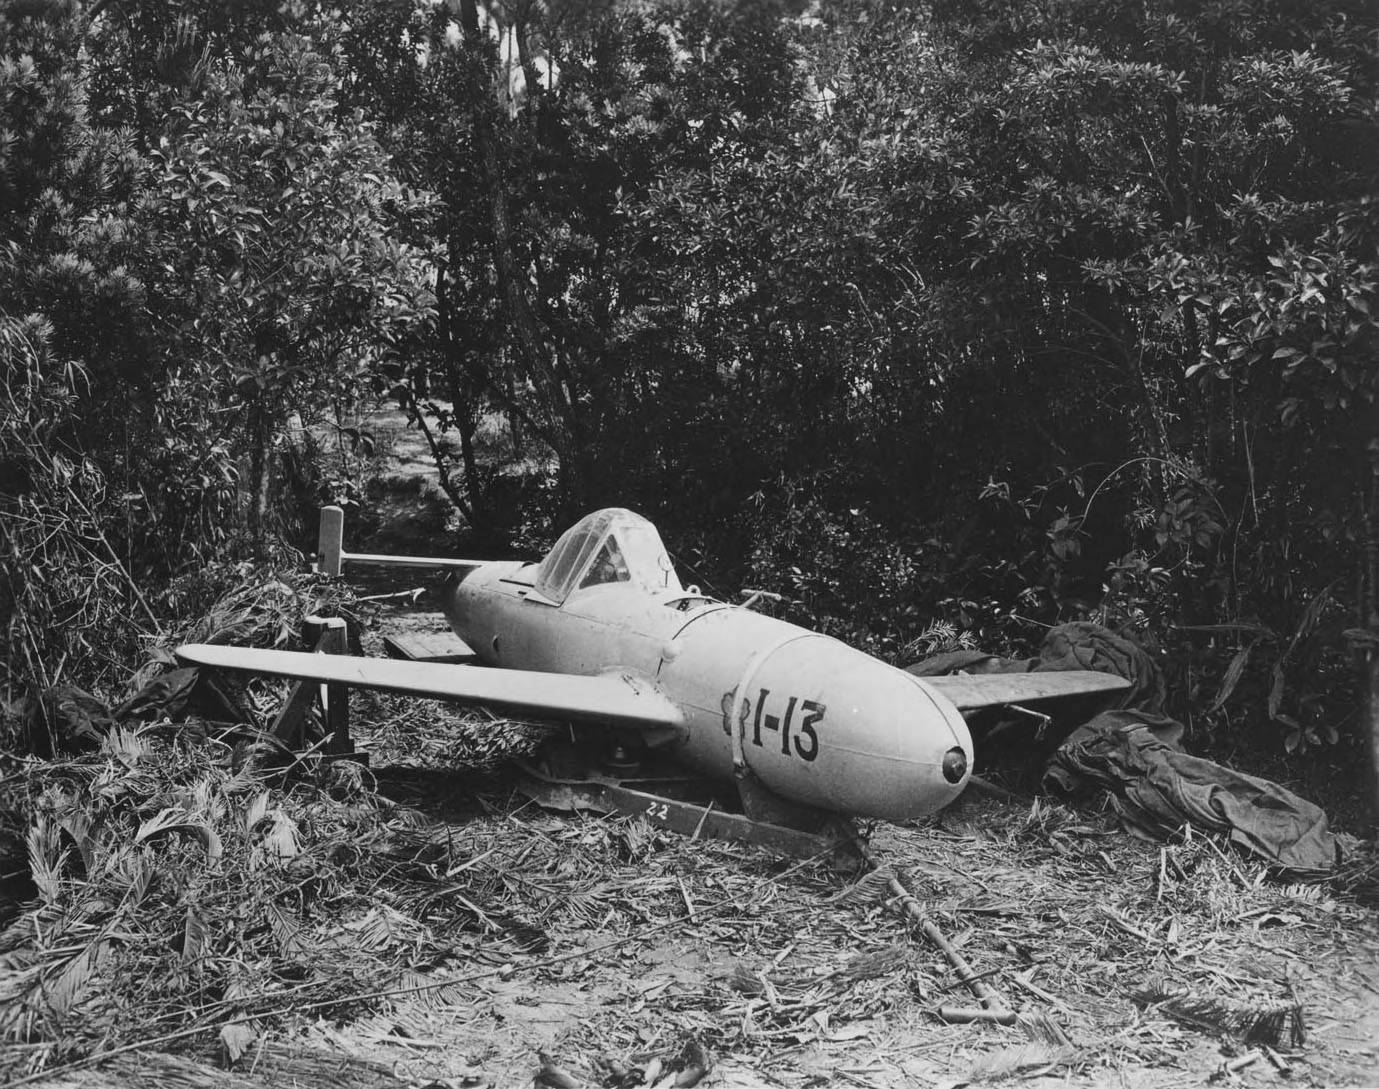 MXY7 Ohka Model 11 aircraft I-13, captured by Americans at Yontan airfield, Okinawa, Japan, Apr 1945, photo 2 of 2